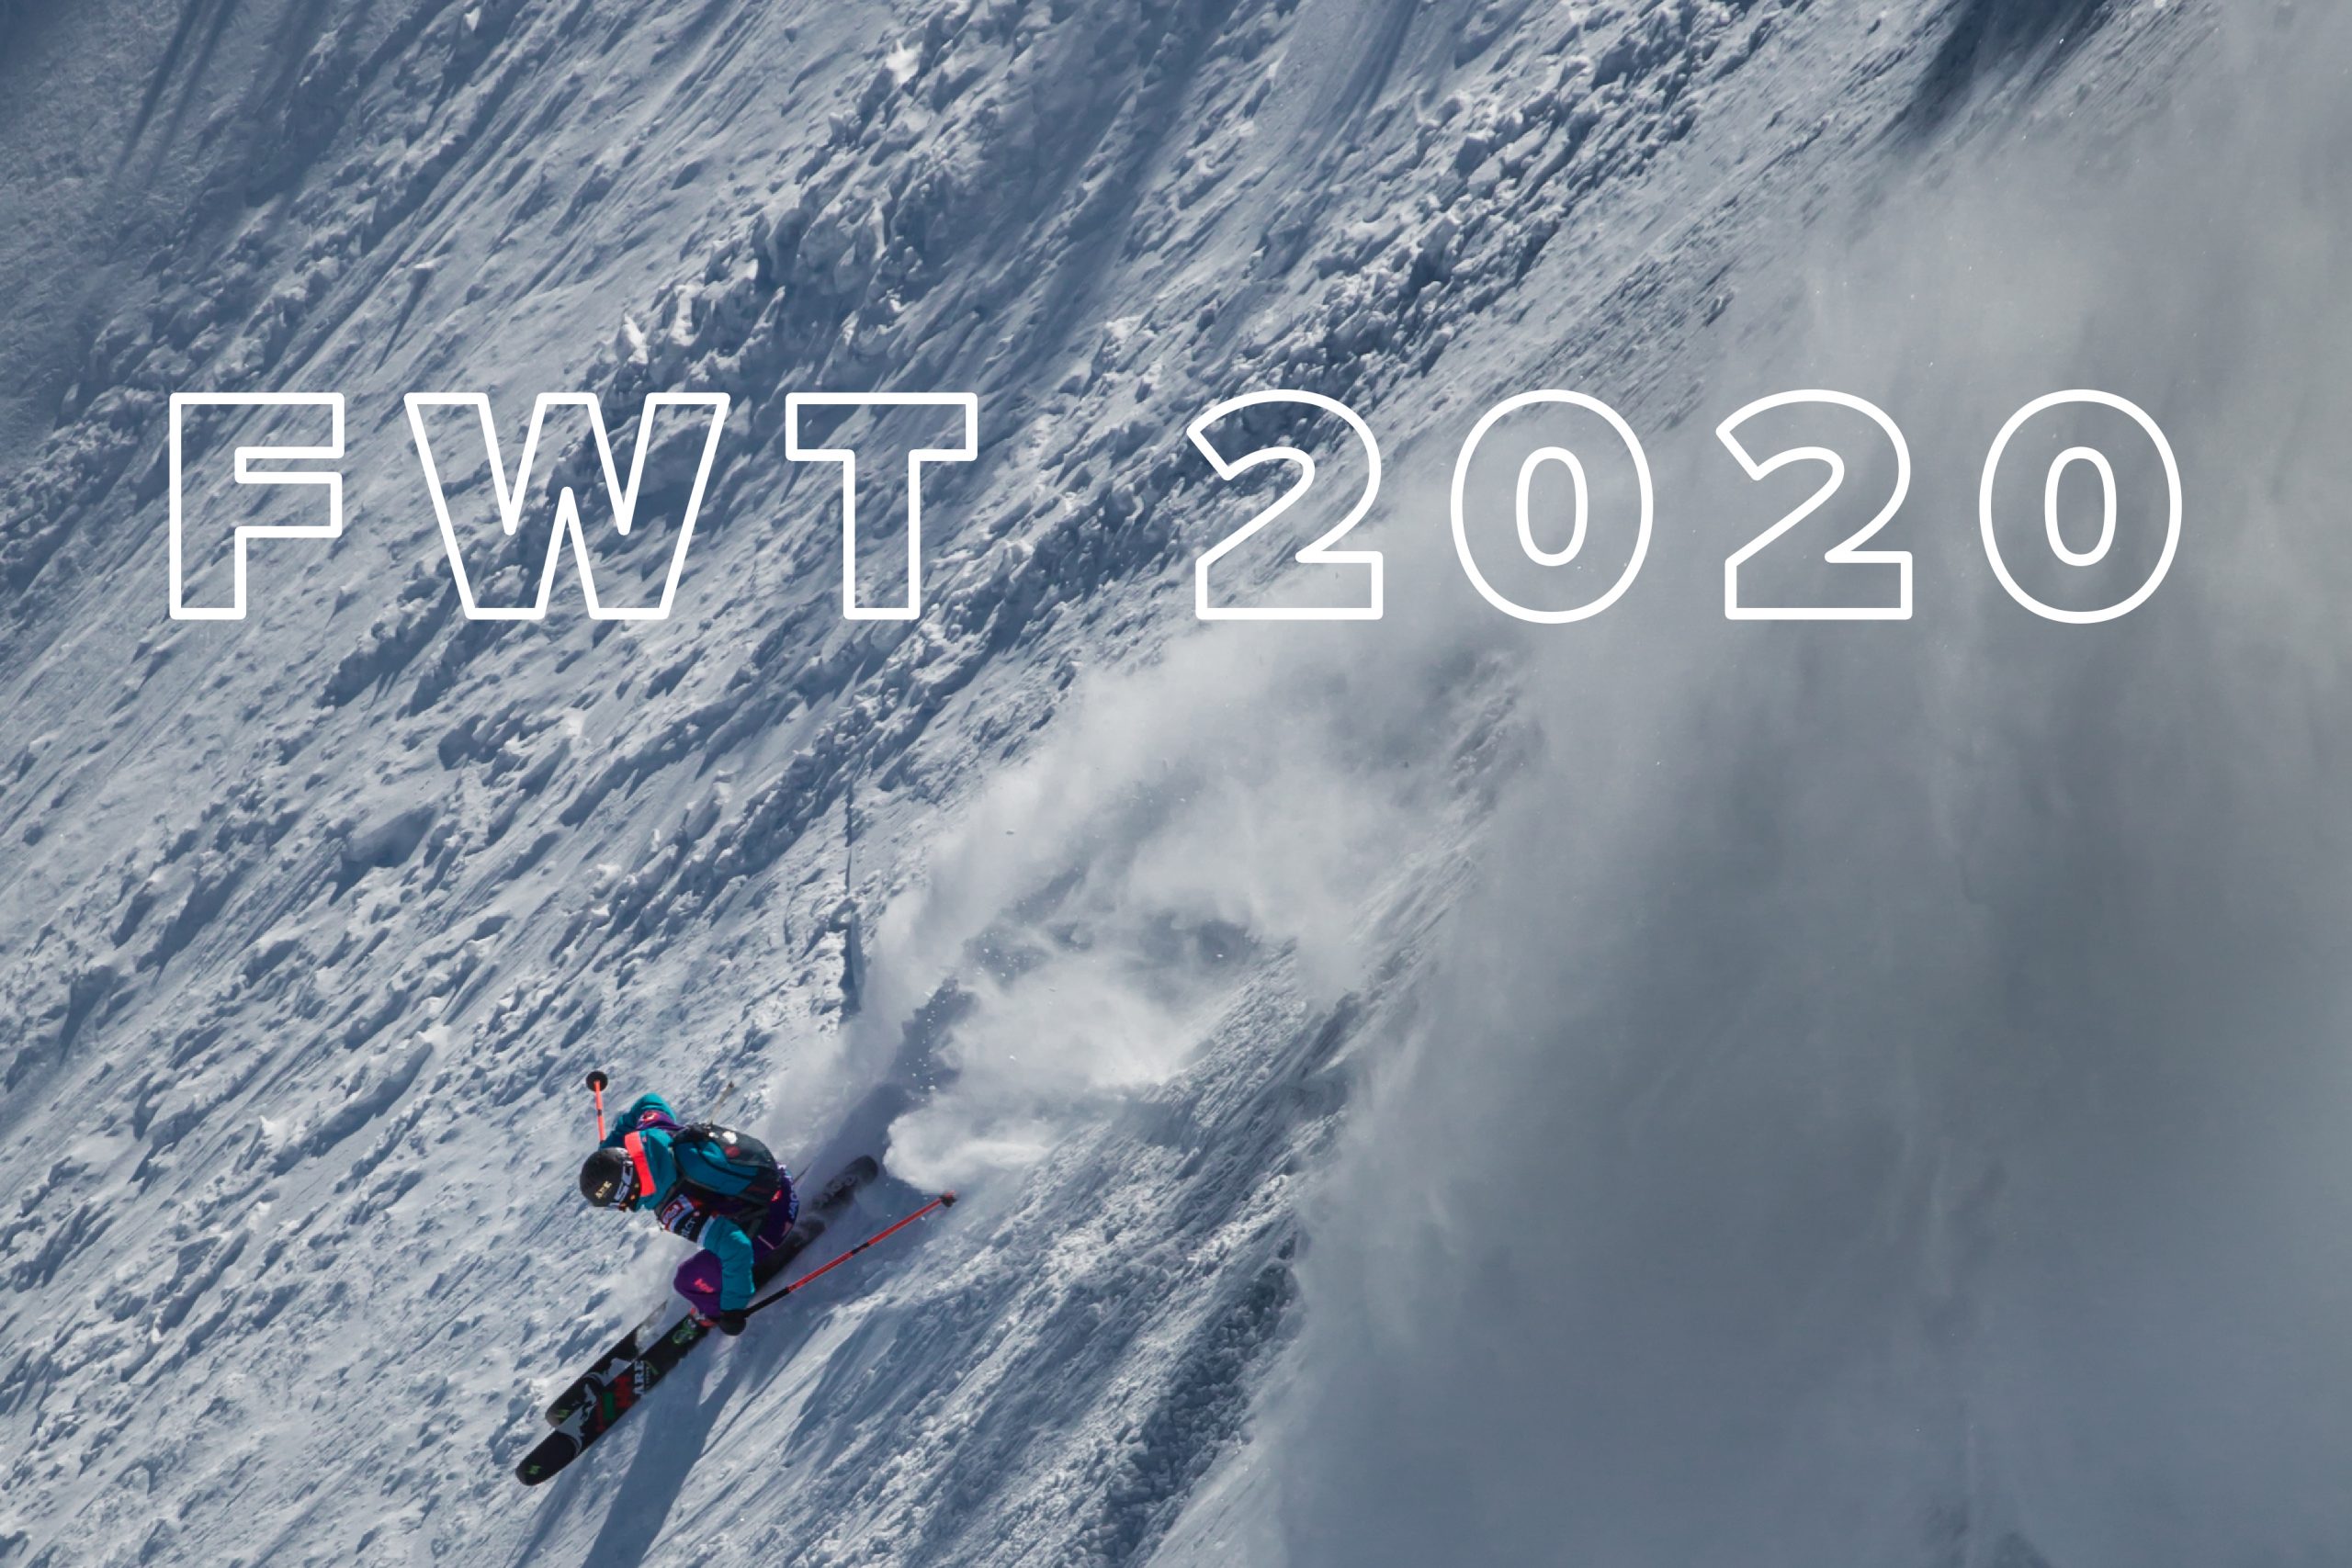 Freeride World Tour 2020 FWT20 Calendar Dates Snowboarding Competition